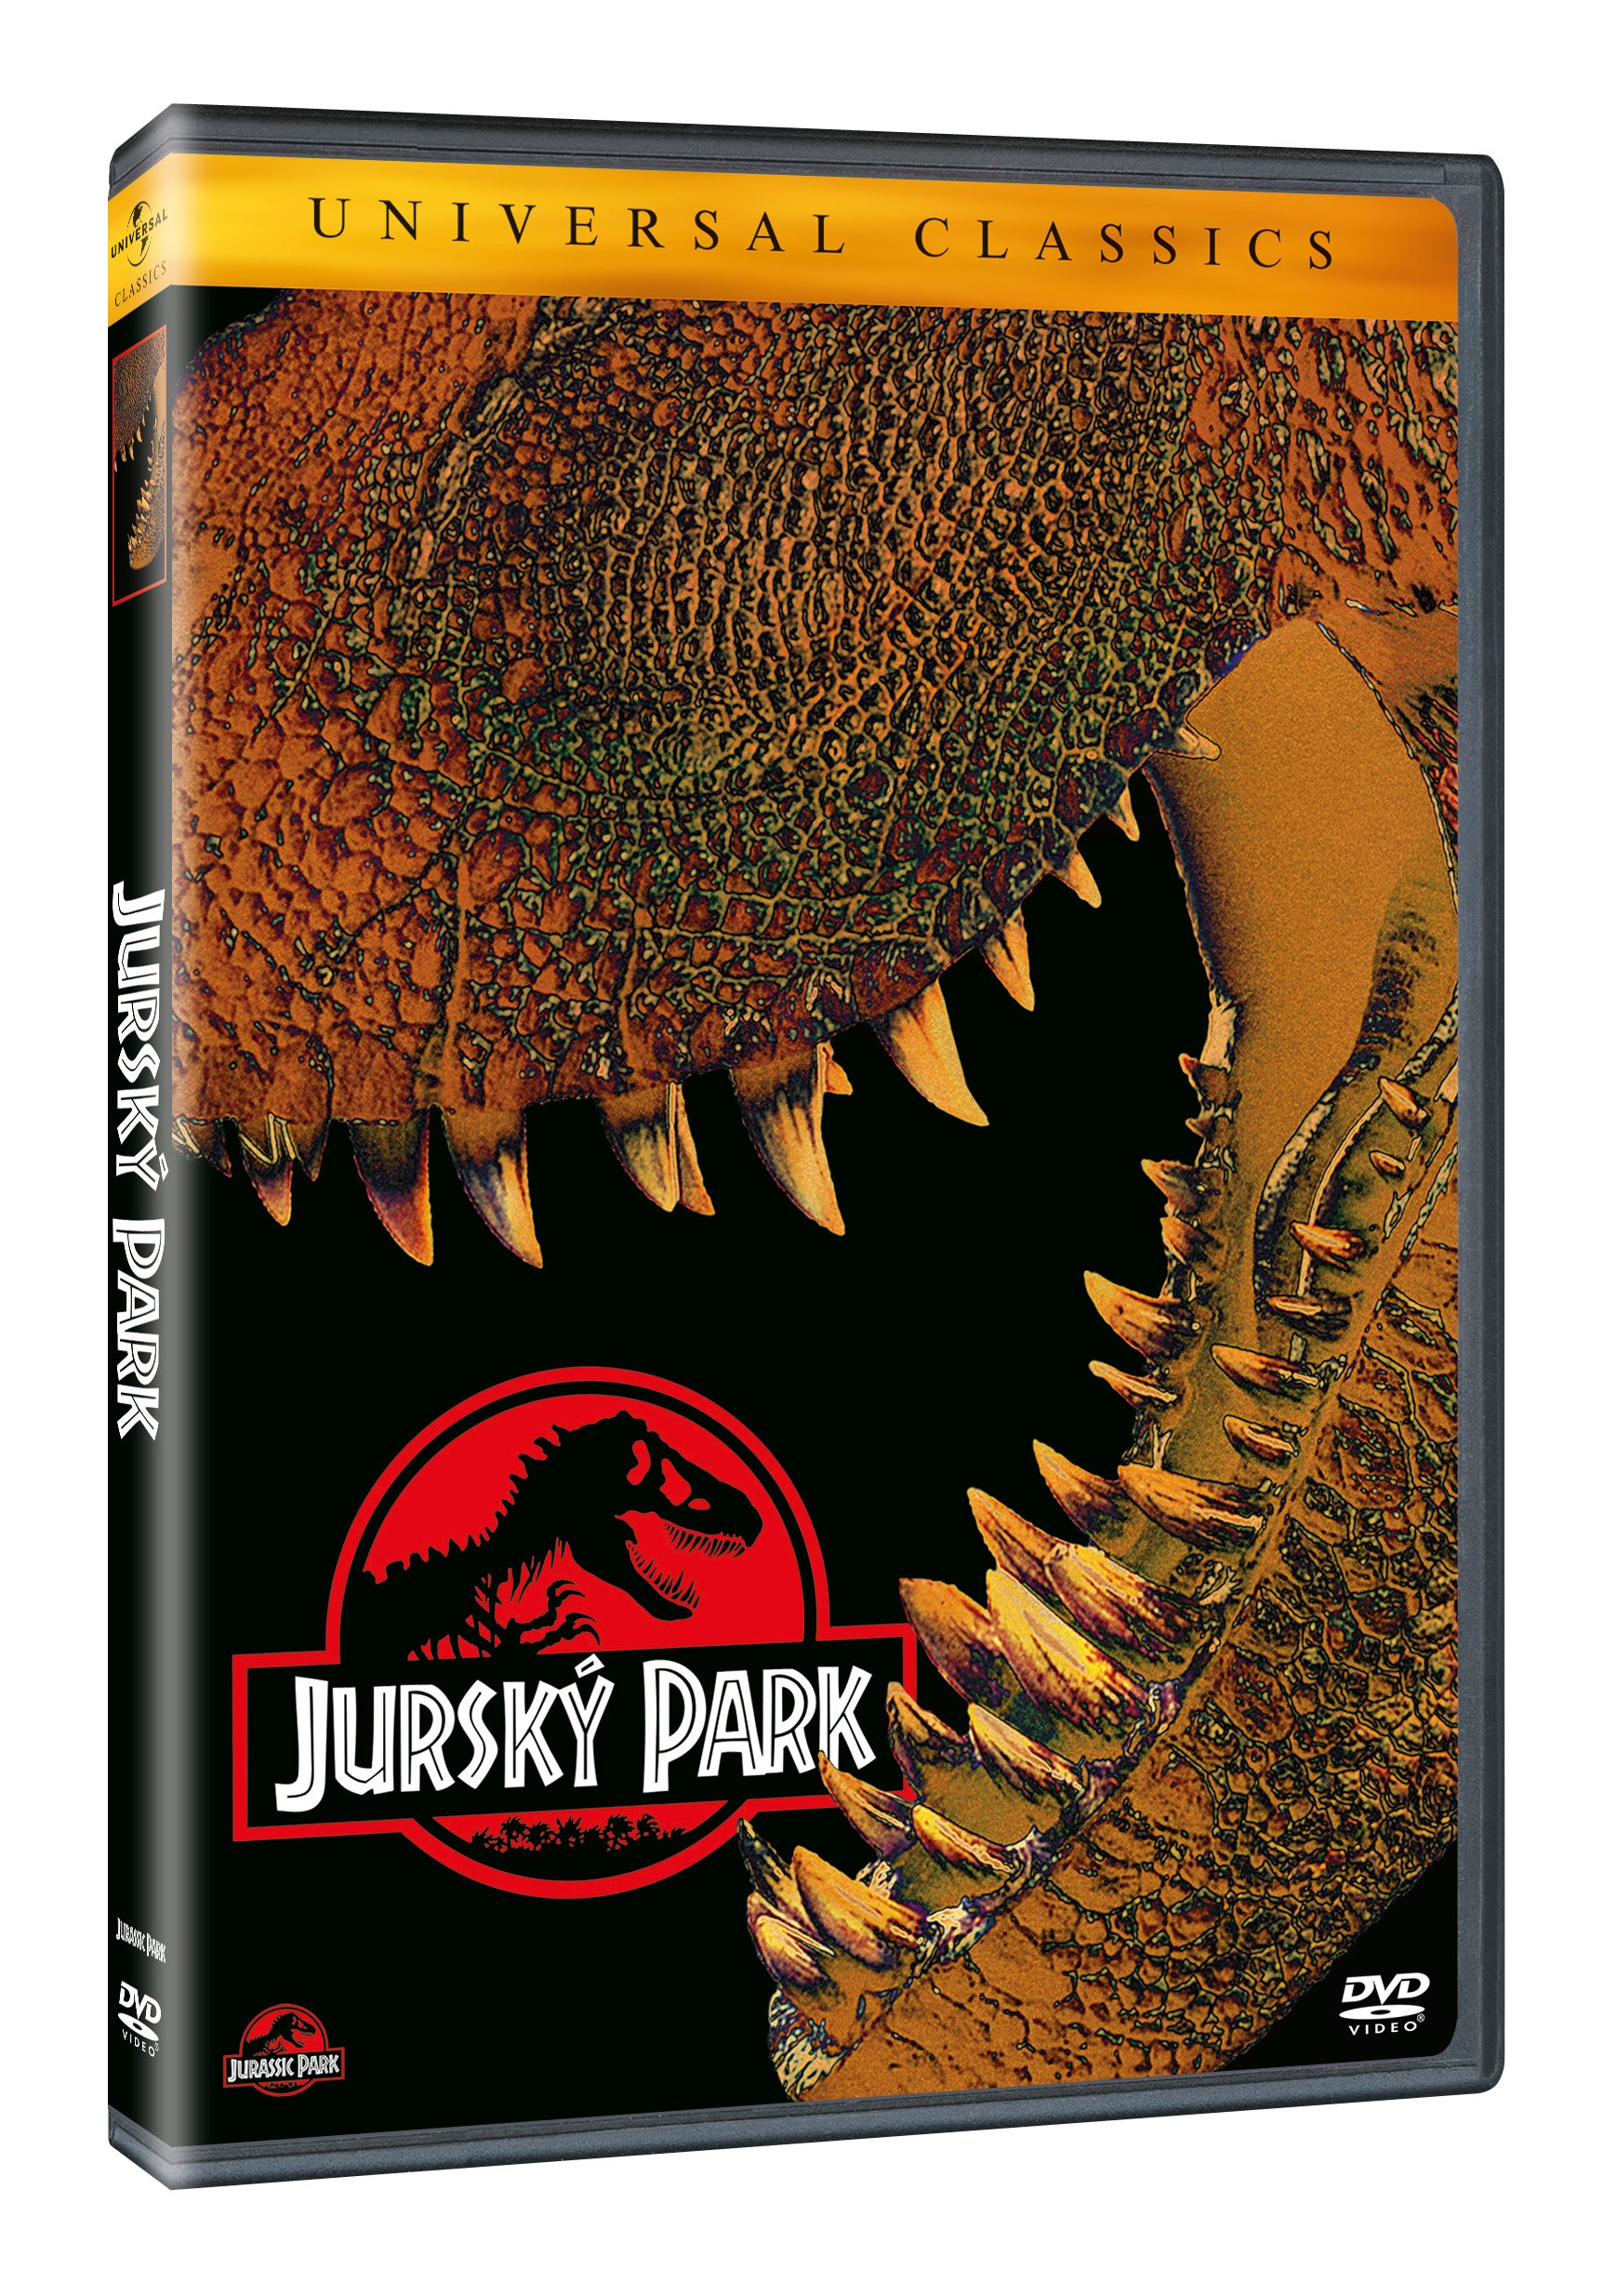 Jursky park DVD / Jurassic Park